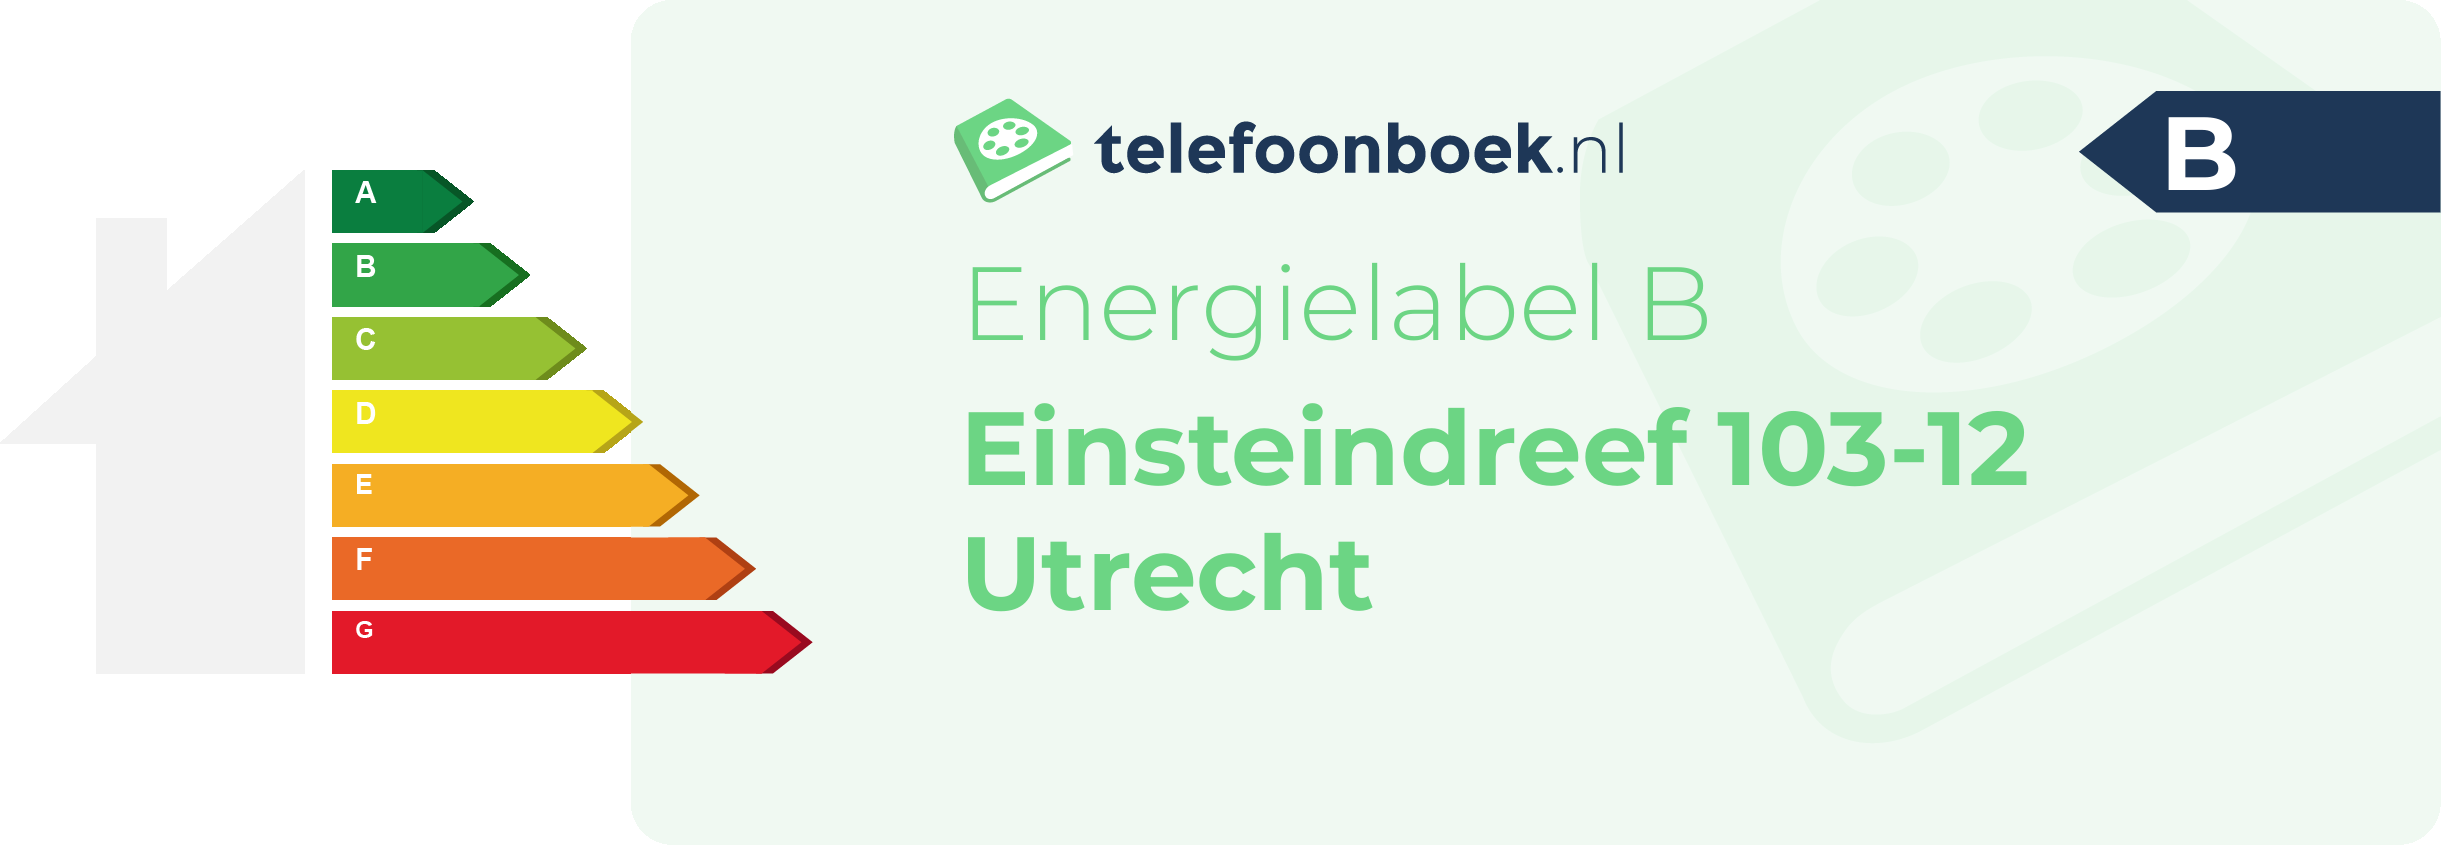 Energielabel Einsteindreef 103-12 Utrecht